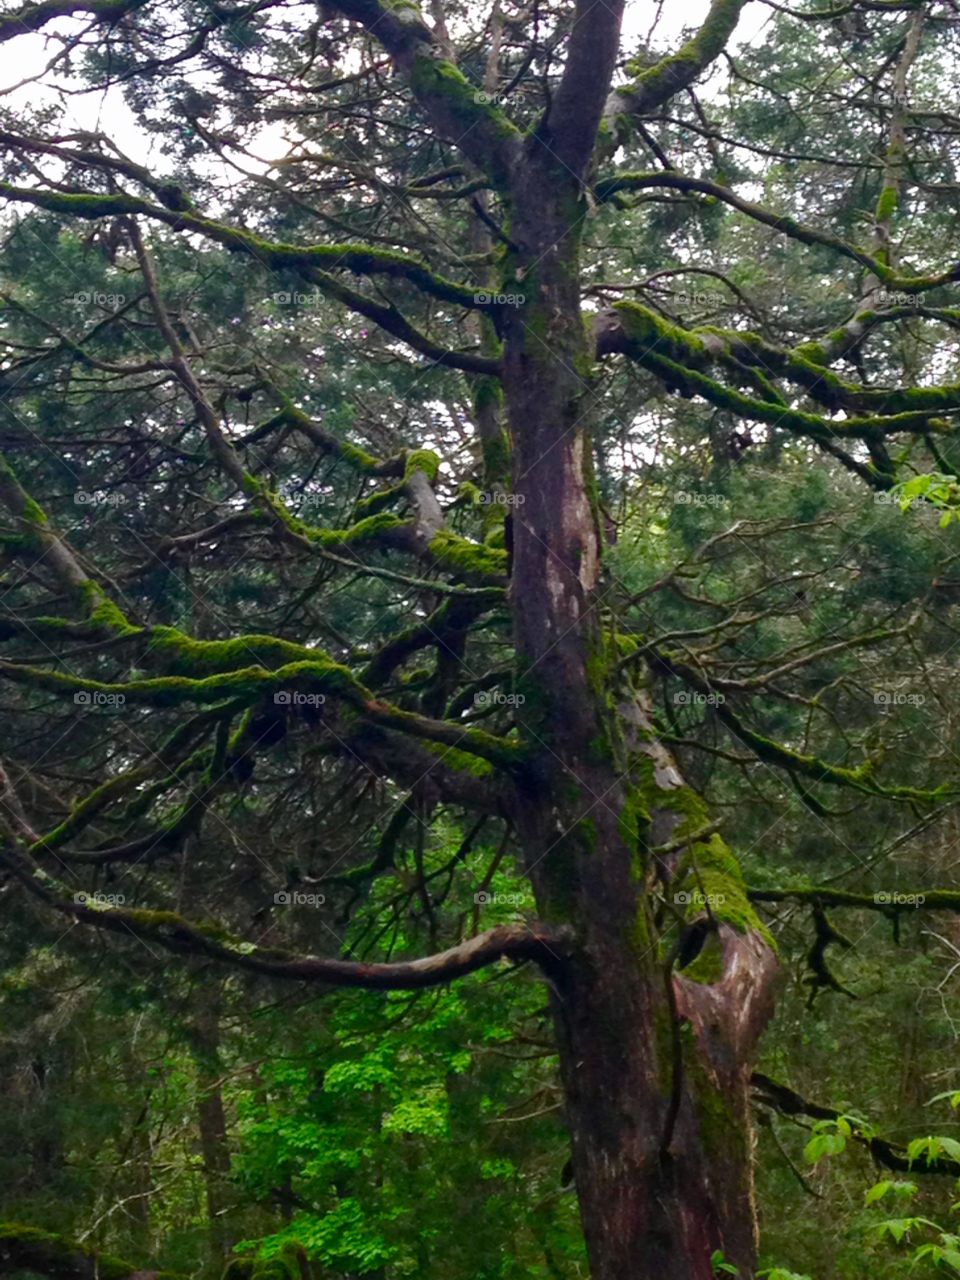 Mossy cedar tree